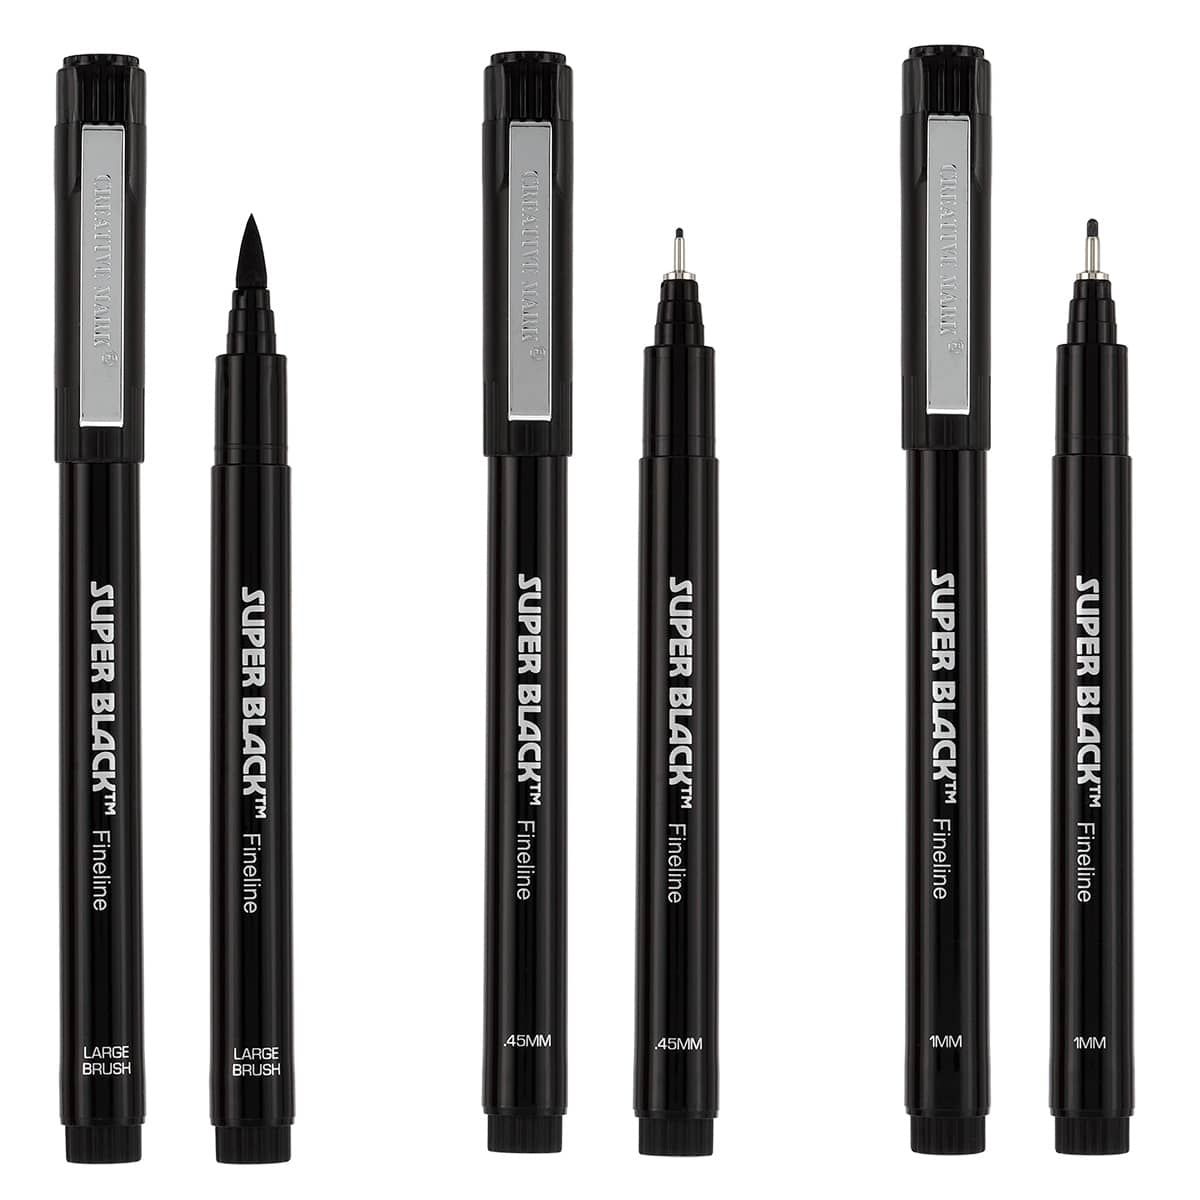 https://www.jerrysartarama.com/media/catalog/product/cache/ecb49a32eeb5603594b082bd5fe65733/c/r/creative-mark-super-black-pen-ultimate-fine-line-drawing-pens.jpg